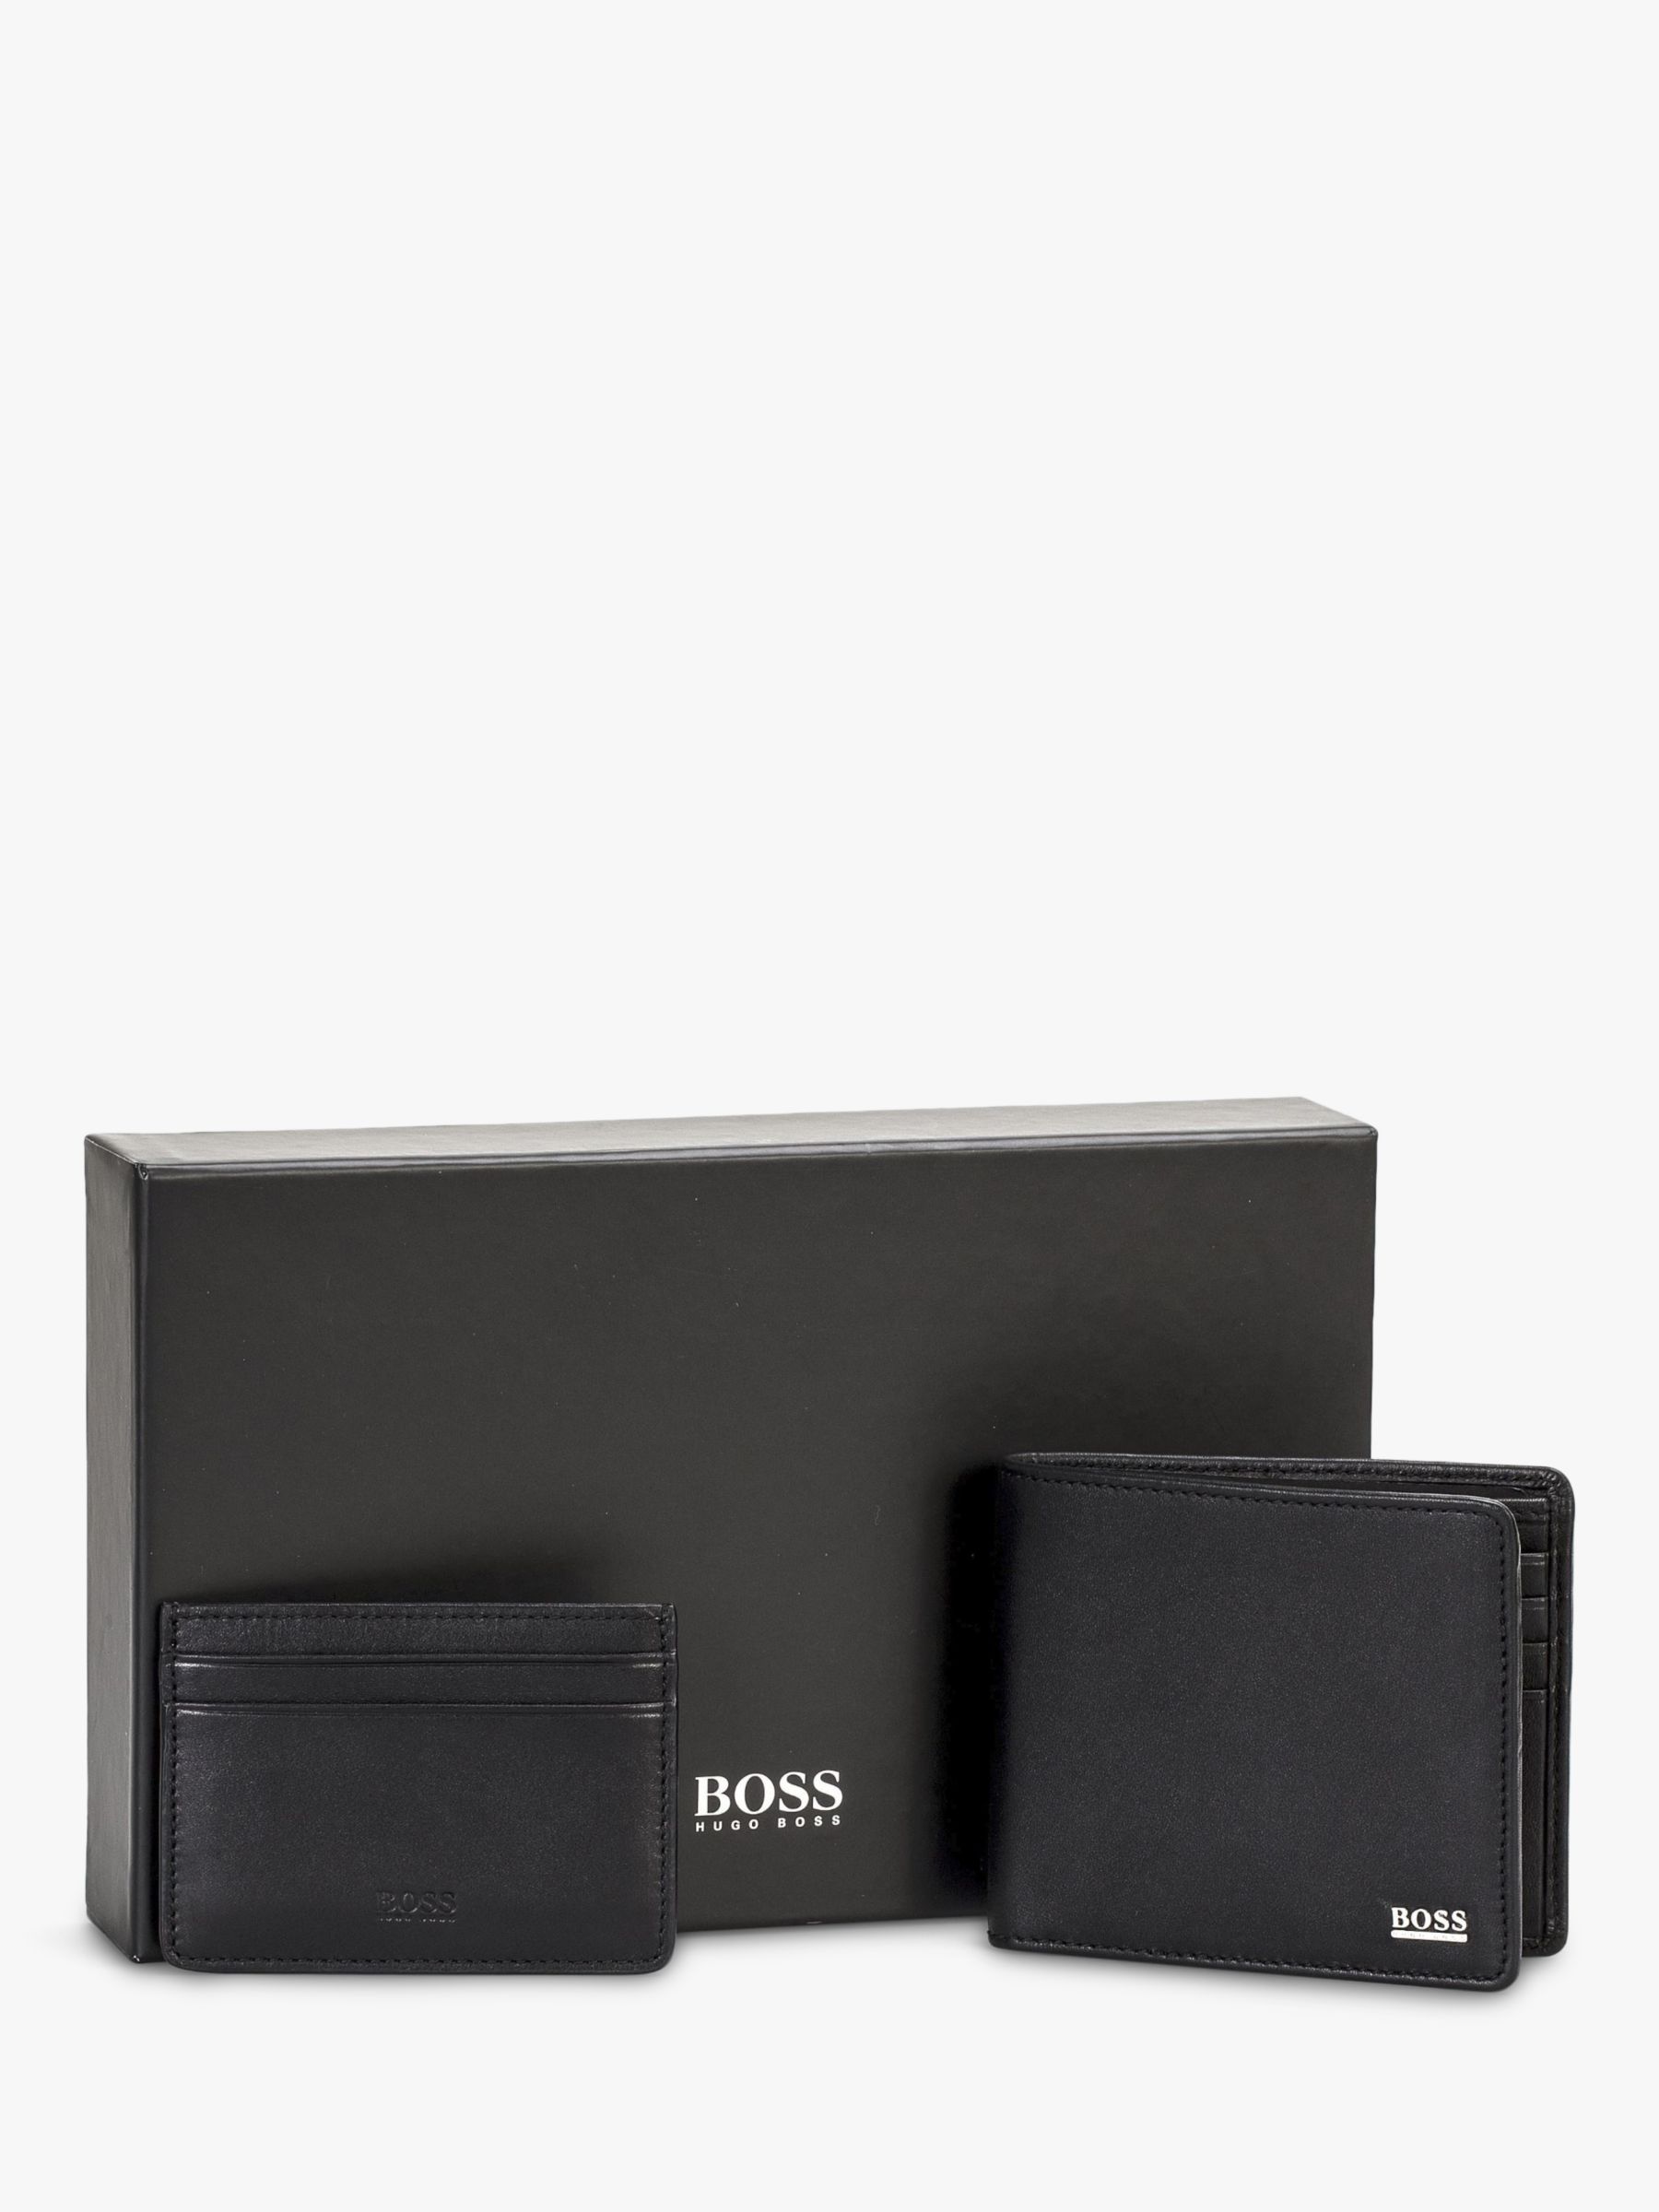 hugo boss wallet and card holder gift set